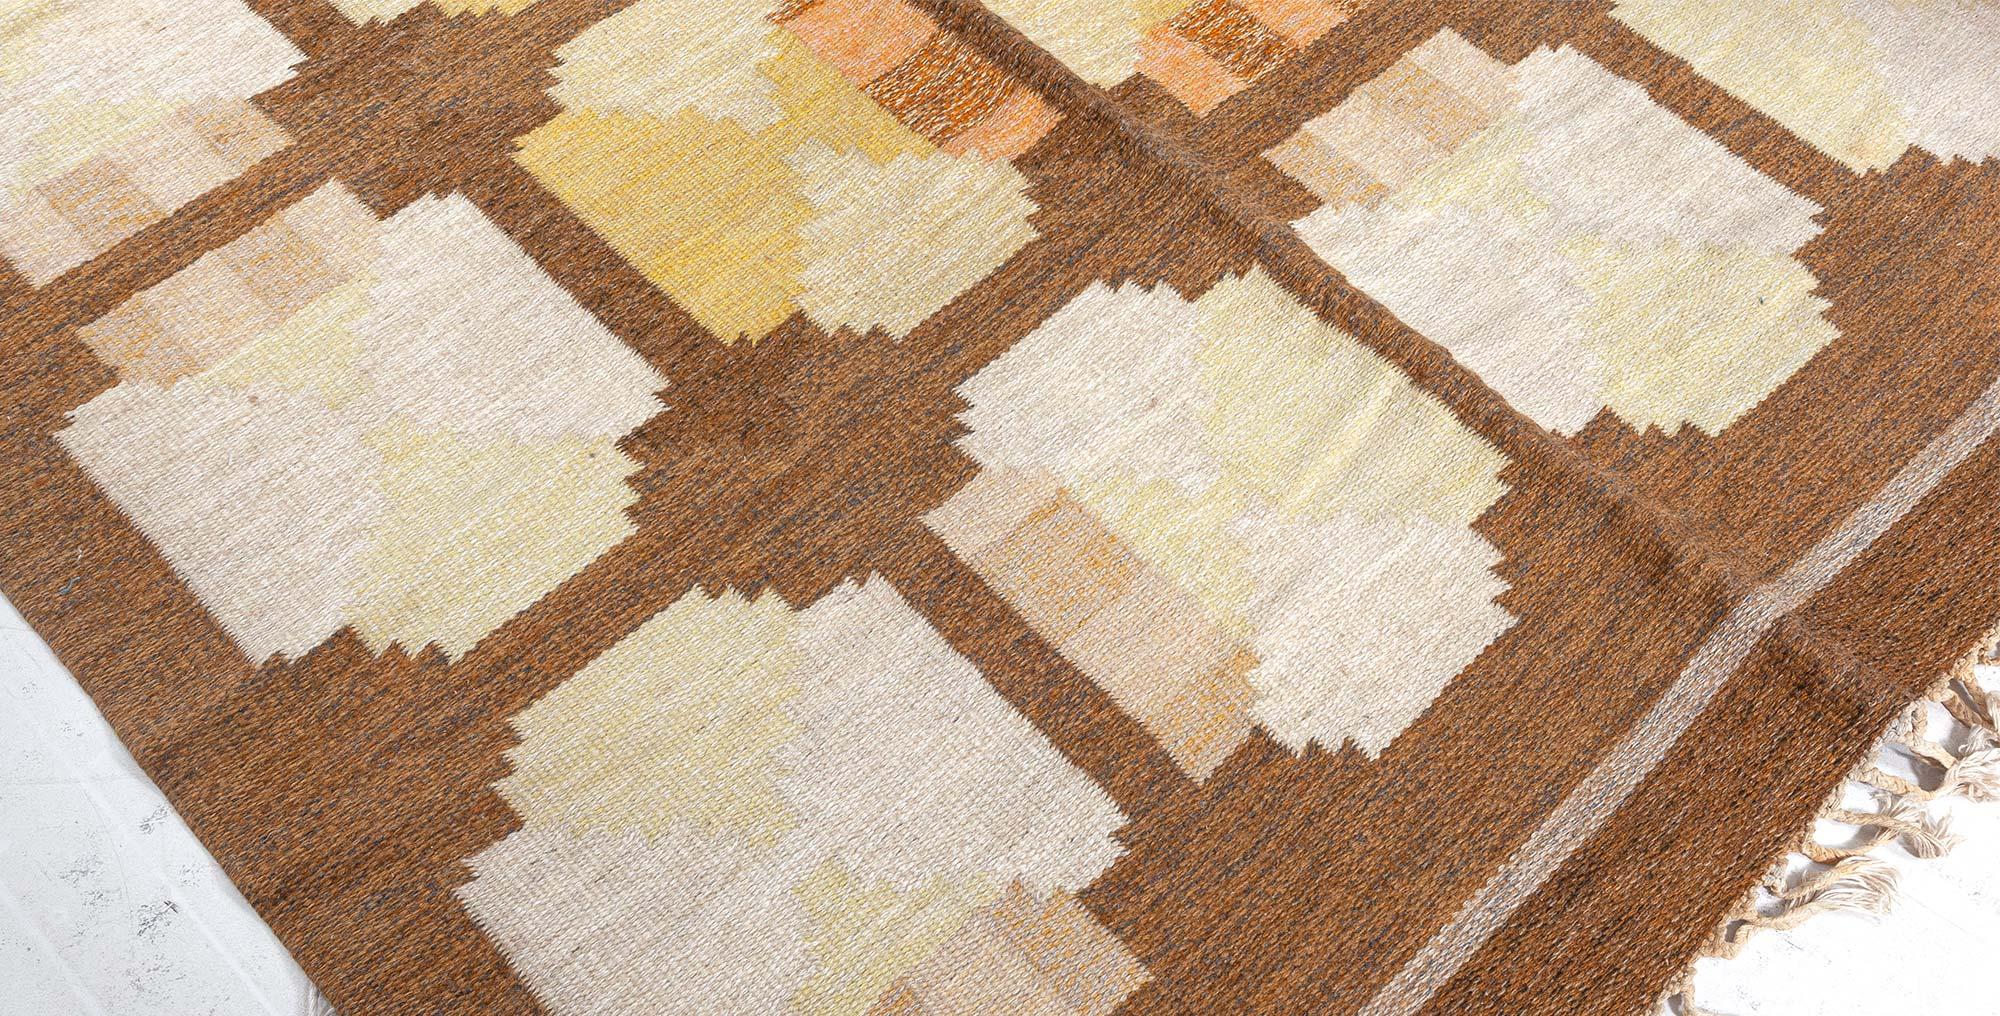 Mid-20th century Swedish Geometric yellow, orange and brown flat-weave wool rug
Size: 6'5